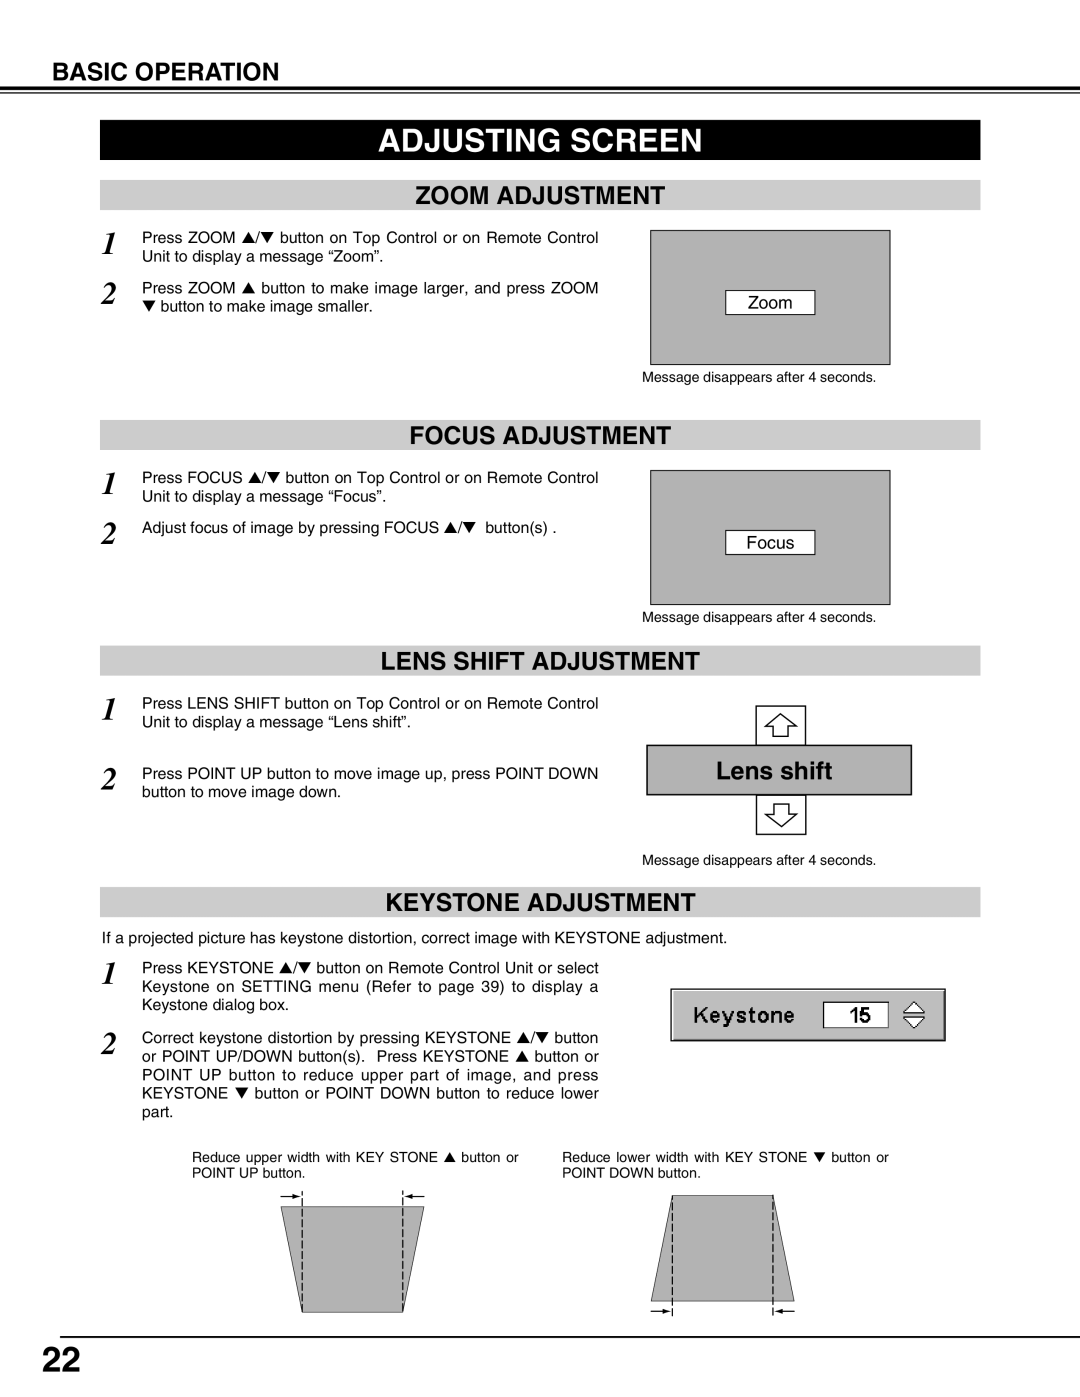 Eiki LC-SX4LA Adjusting Screen, Focus Adjustment, Lens shift, Keystone Adjustment, Basic Operation, Lens Shift Adjustment 